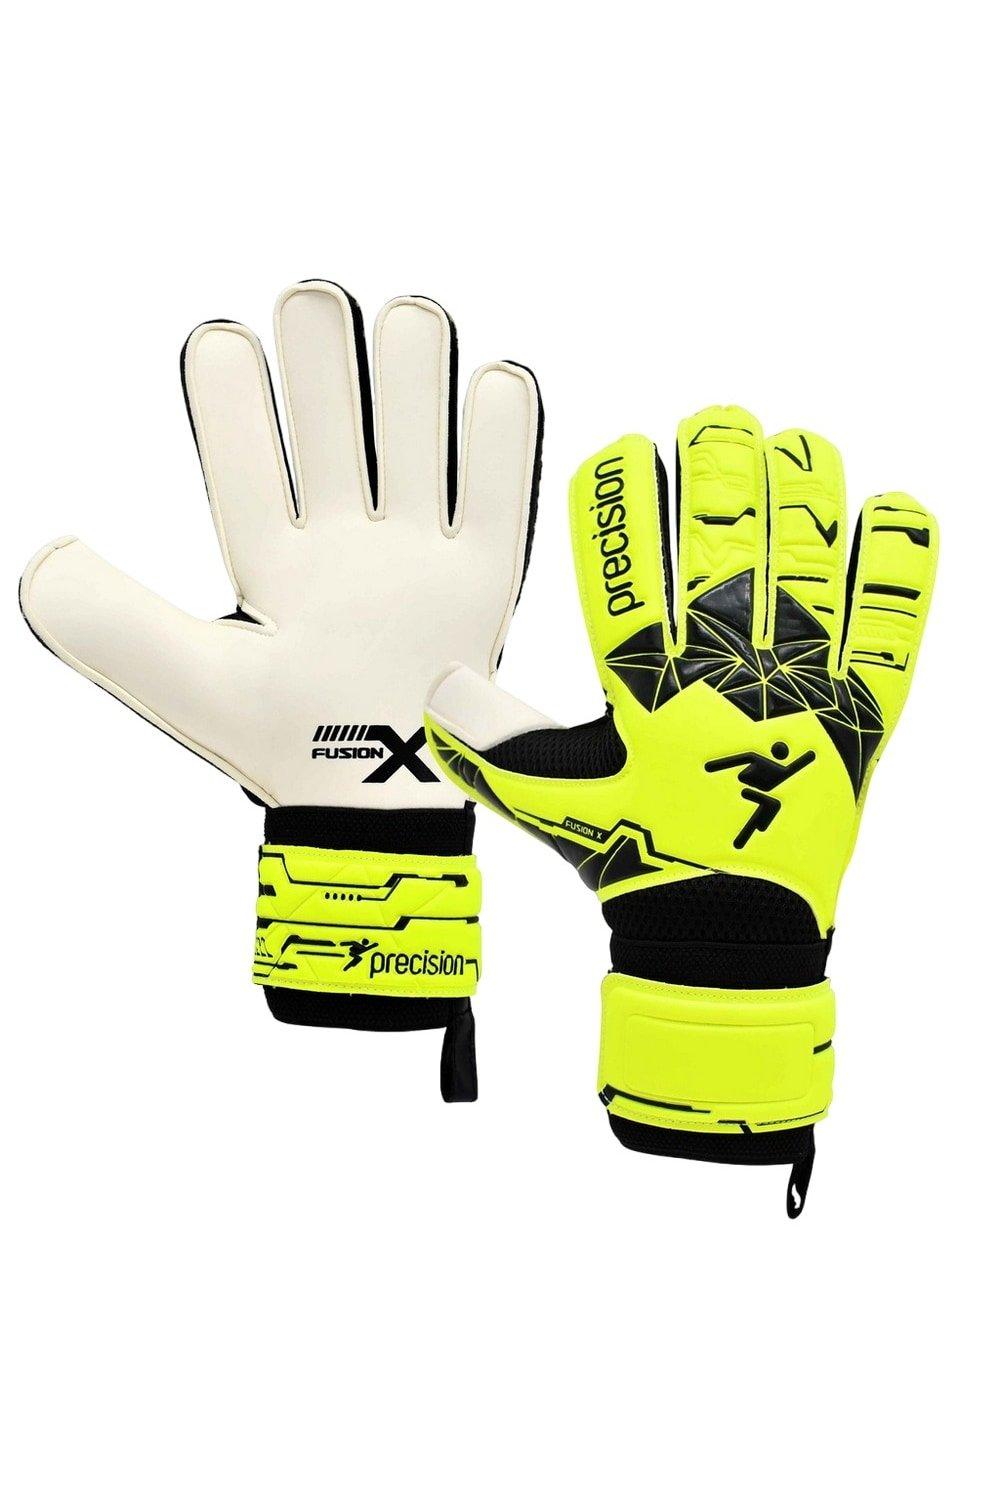 Вратарские перчатки Fusion X Precision, белый перчатки вратарские adidas детские x gl lge j желтый